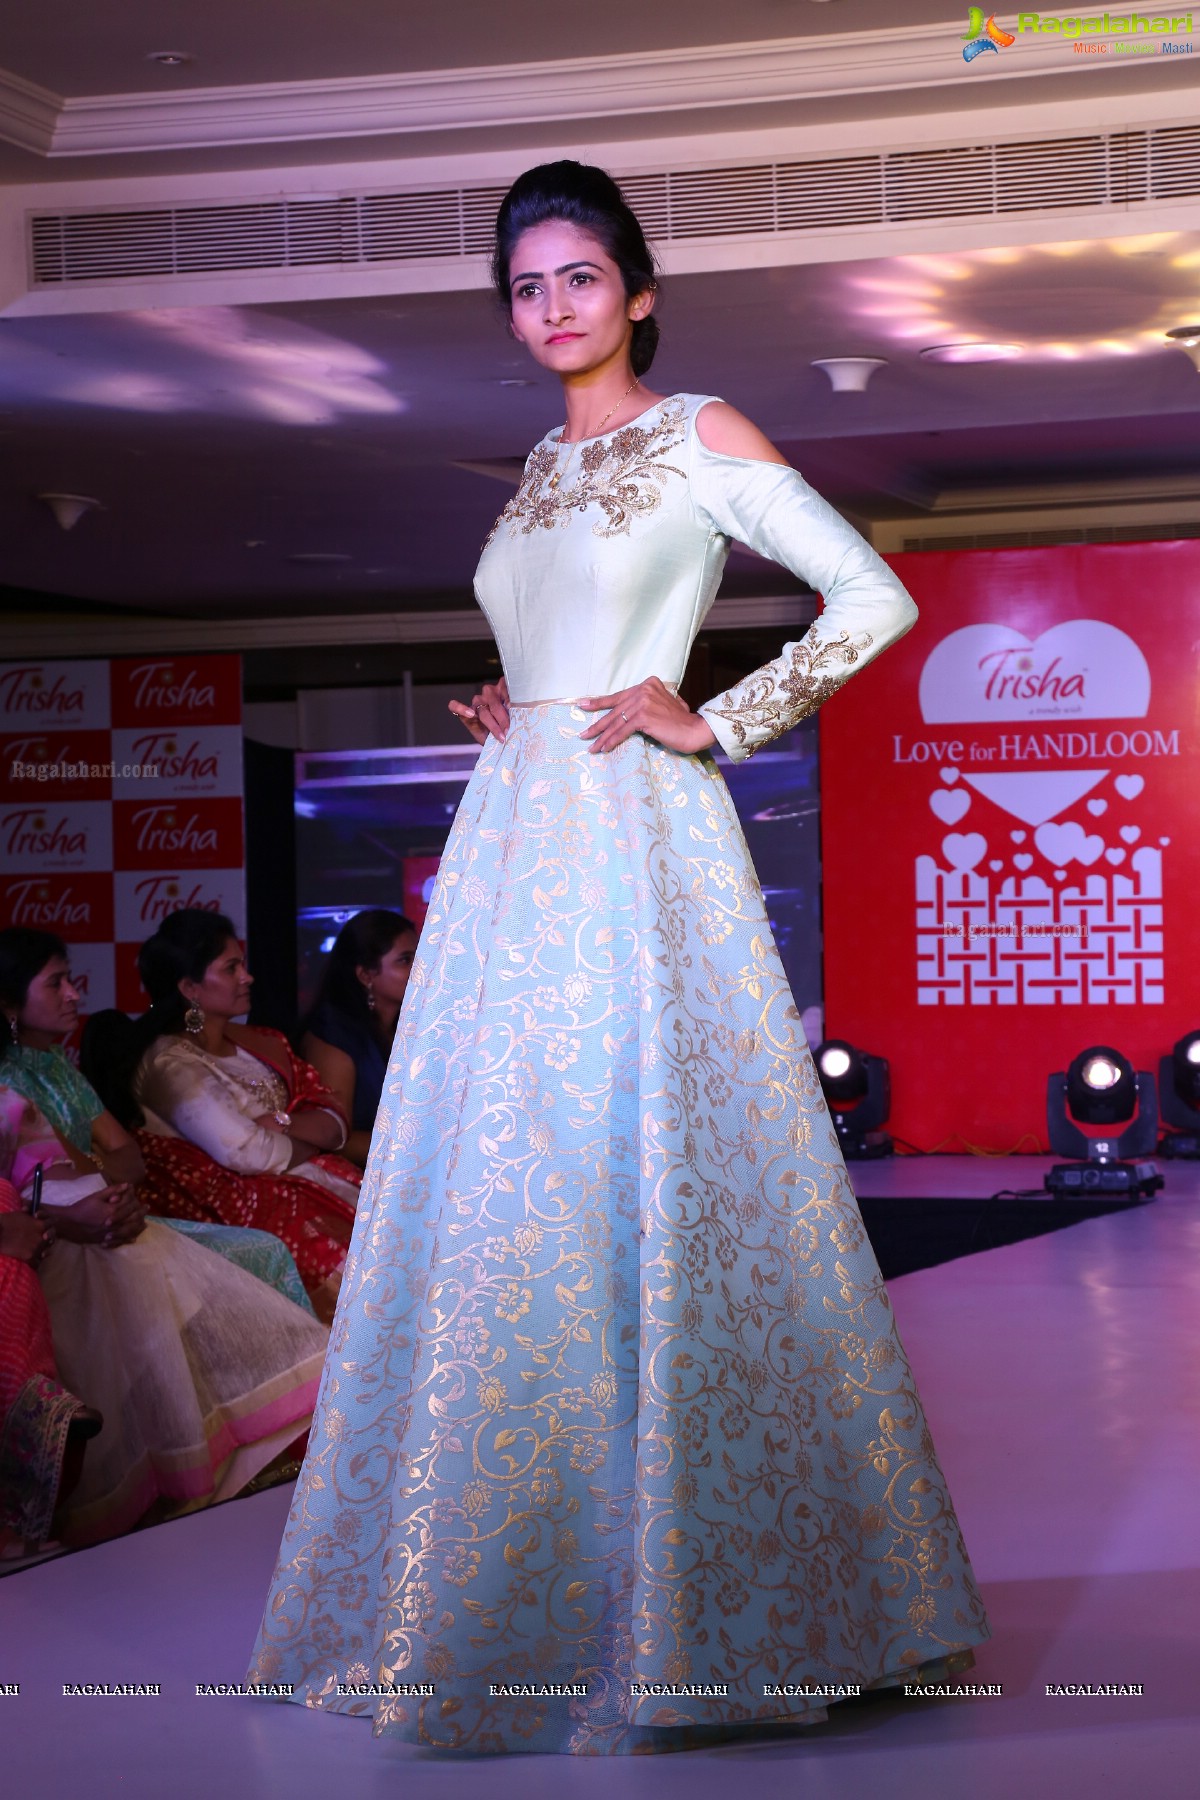 Trisha Love for Handloom Fashion Show at Taj Krishna, Hyderabad